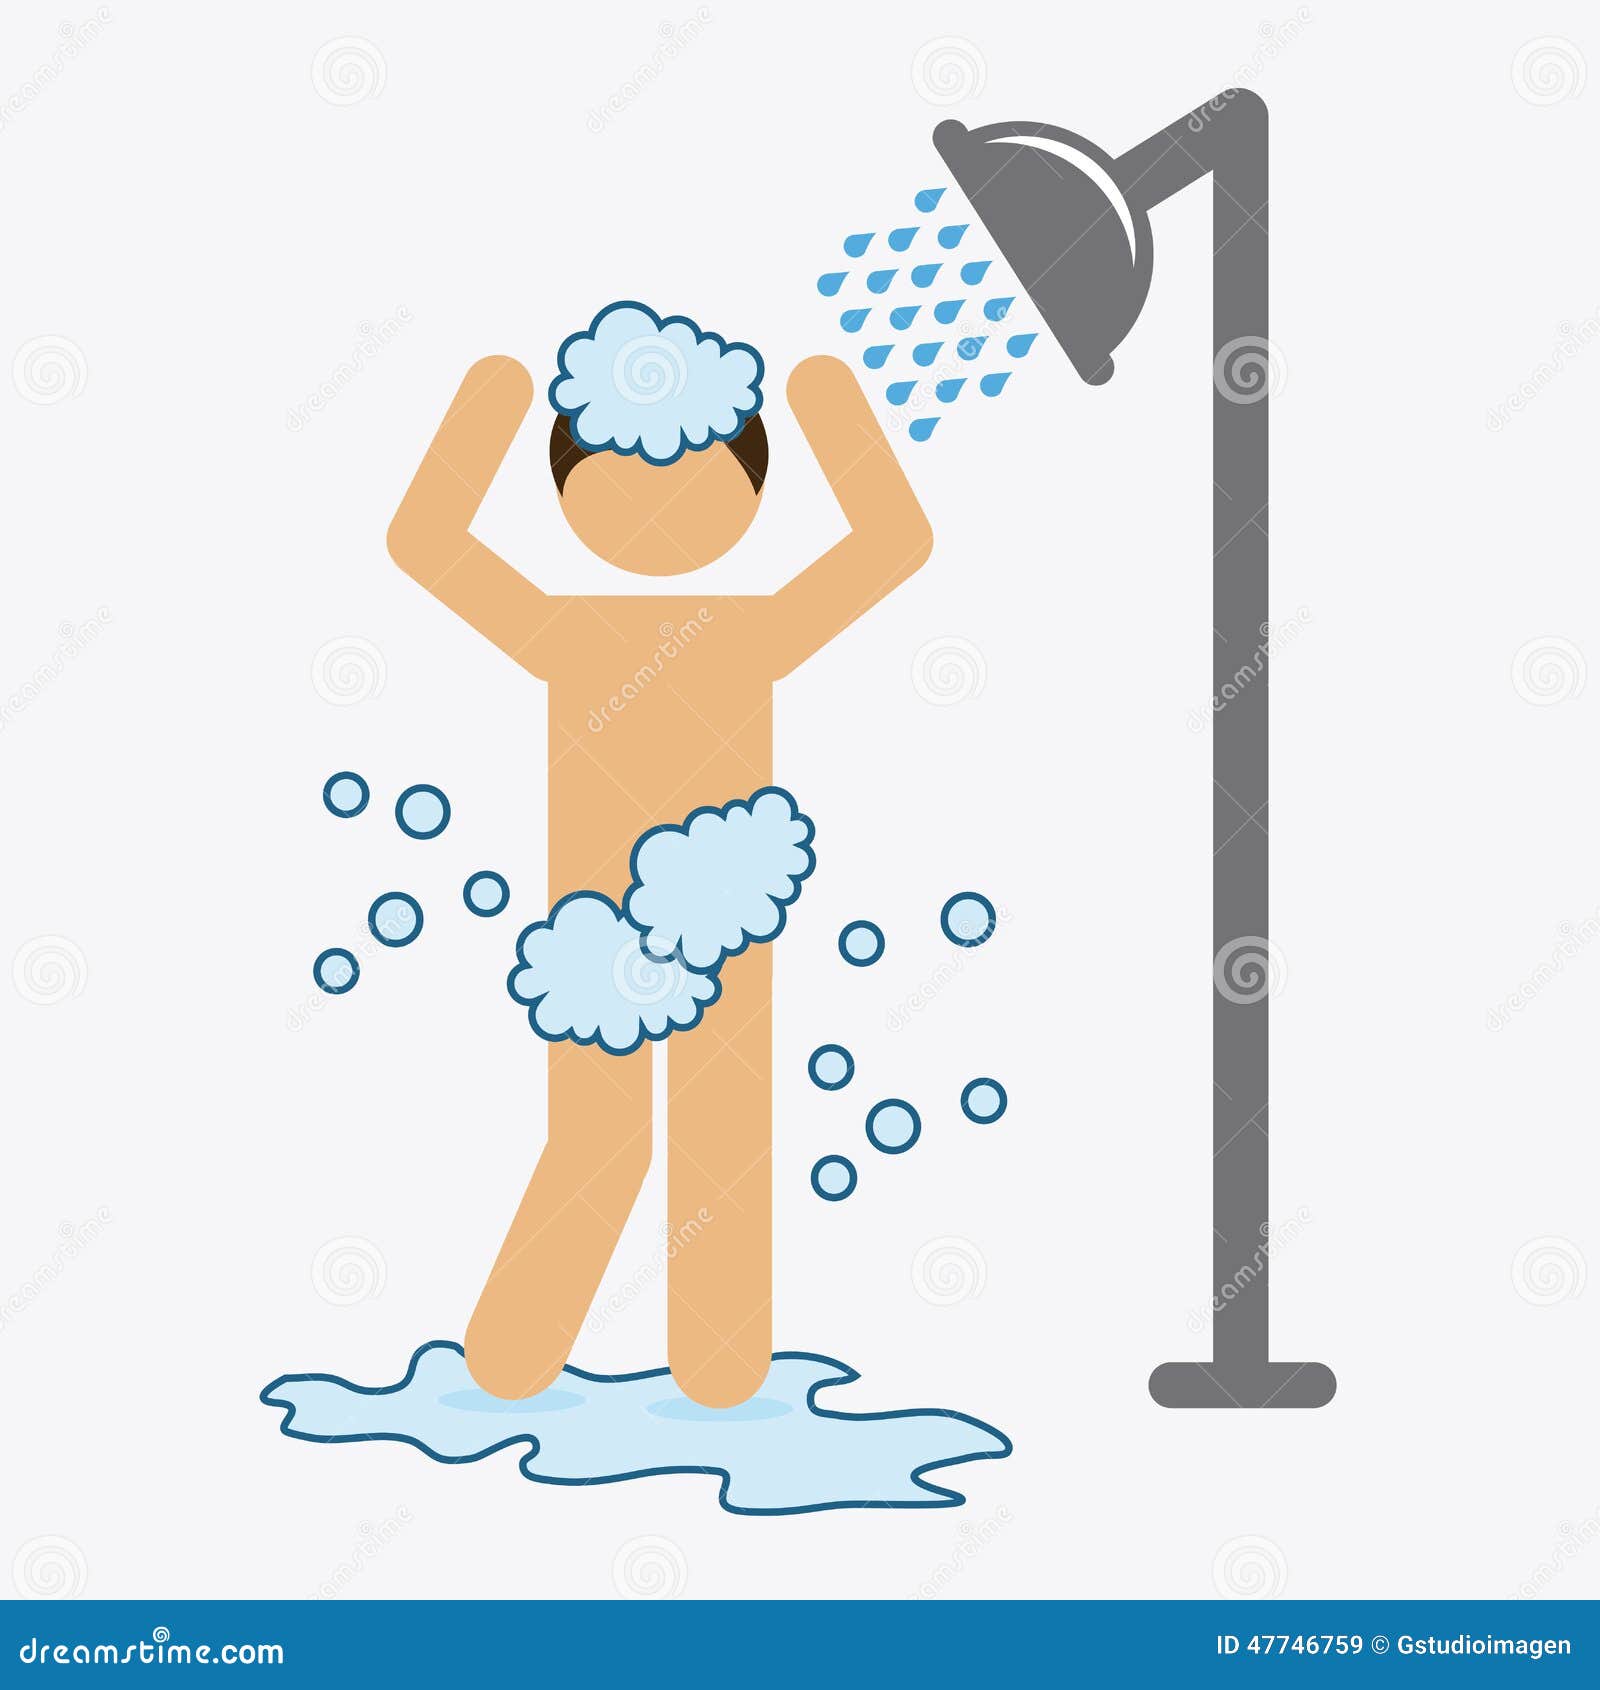 Shower design stock illustration. Illustration of symbol - 47746759